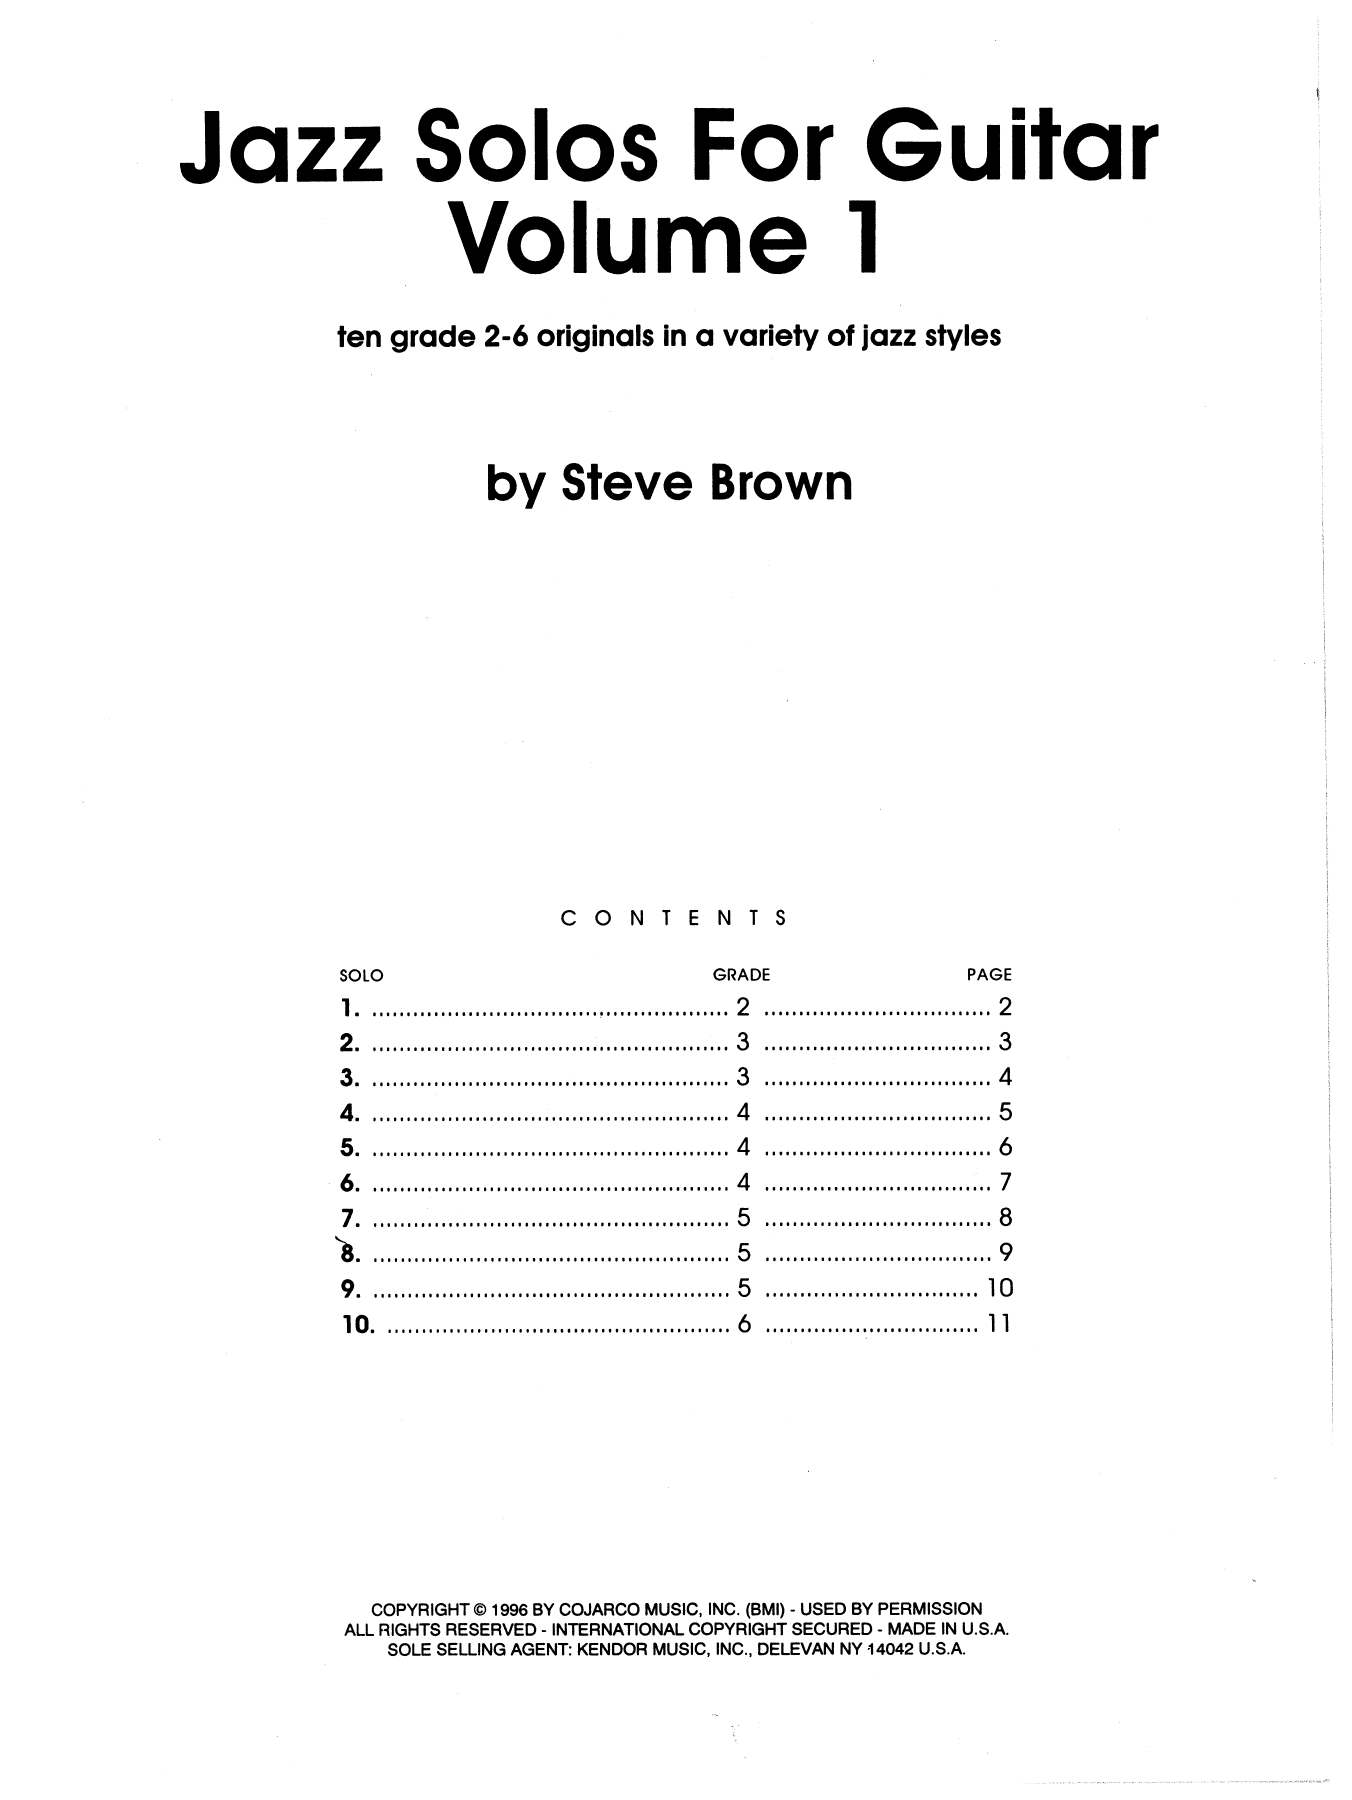 Download Steve Brown Jazz Solos For Guitar, Volume 1 Sheet Music